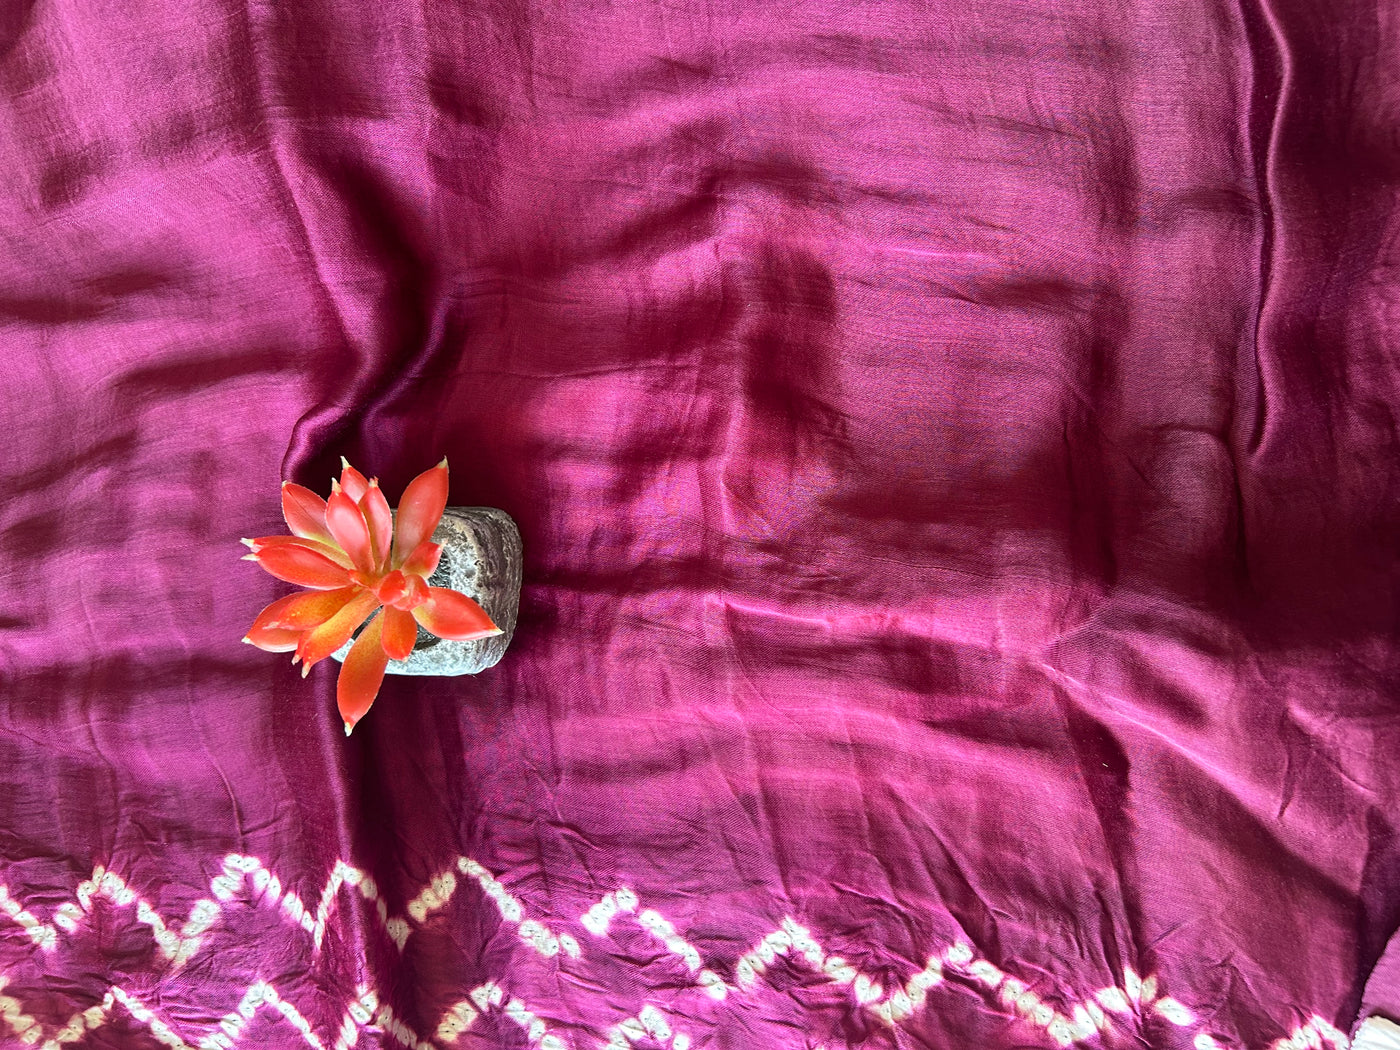 Baijani moti:Handmade shibori modal silk tissue pallu saree